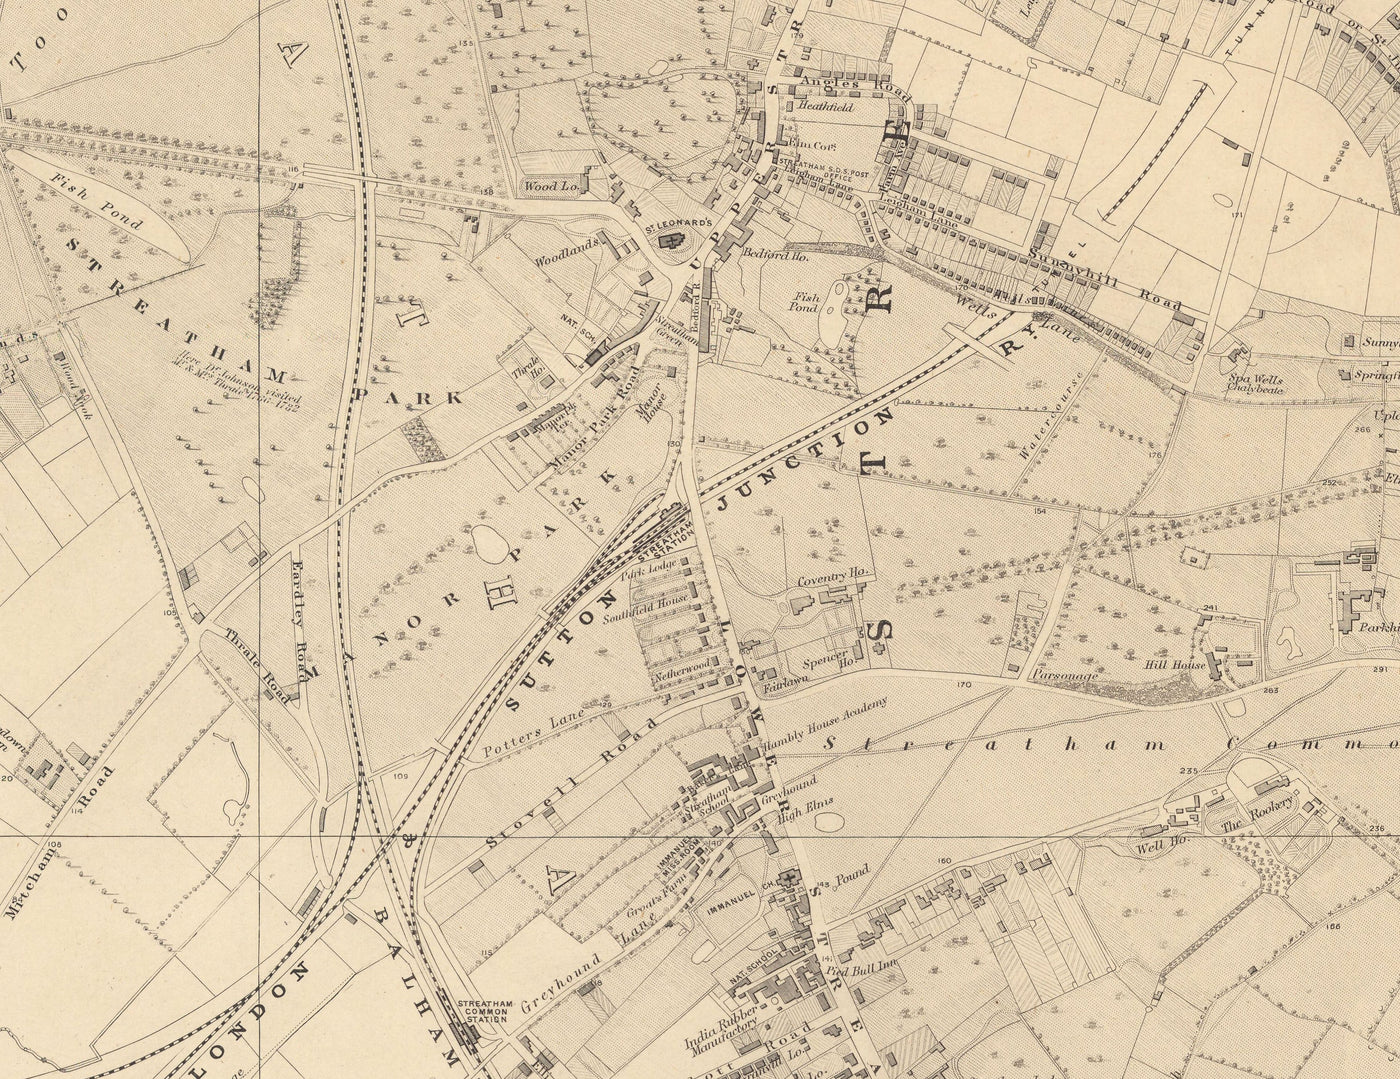 Ancienne carte de Sud London en 1862 par Edward Stanford - Streatham, Tooting, Mitcham, Norbury - SW17, SW16, CR4